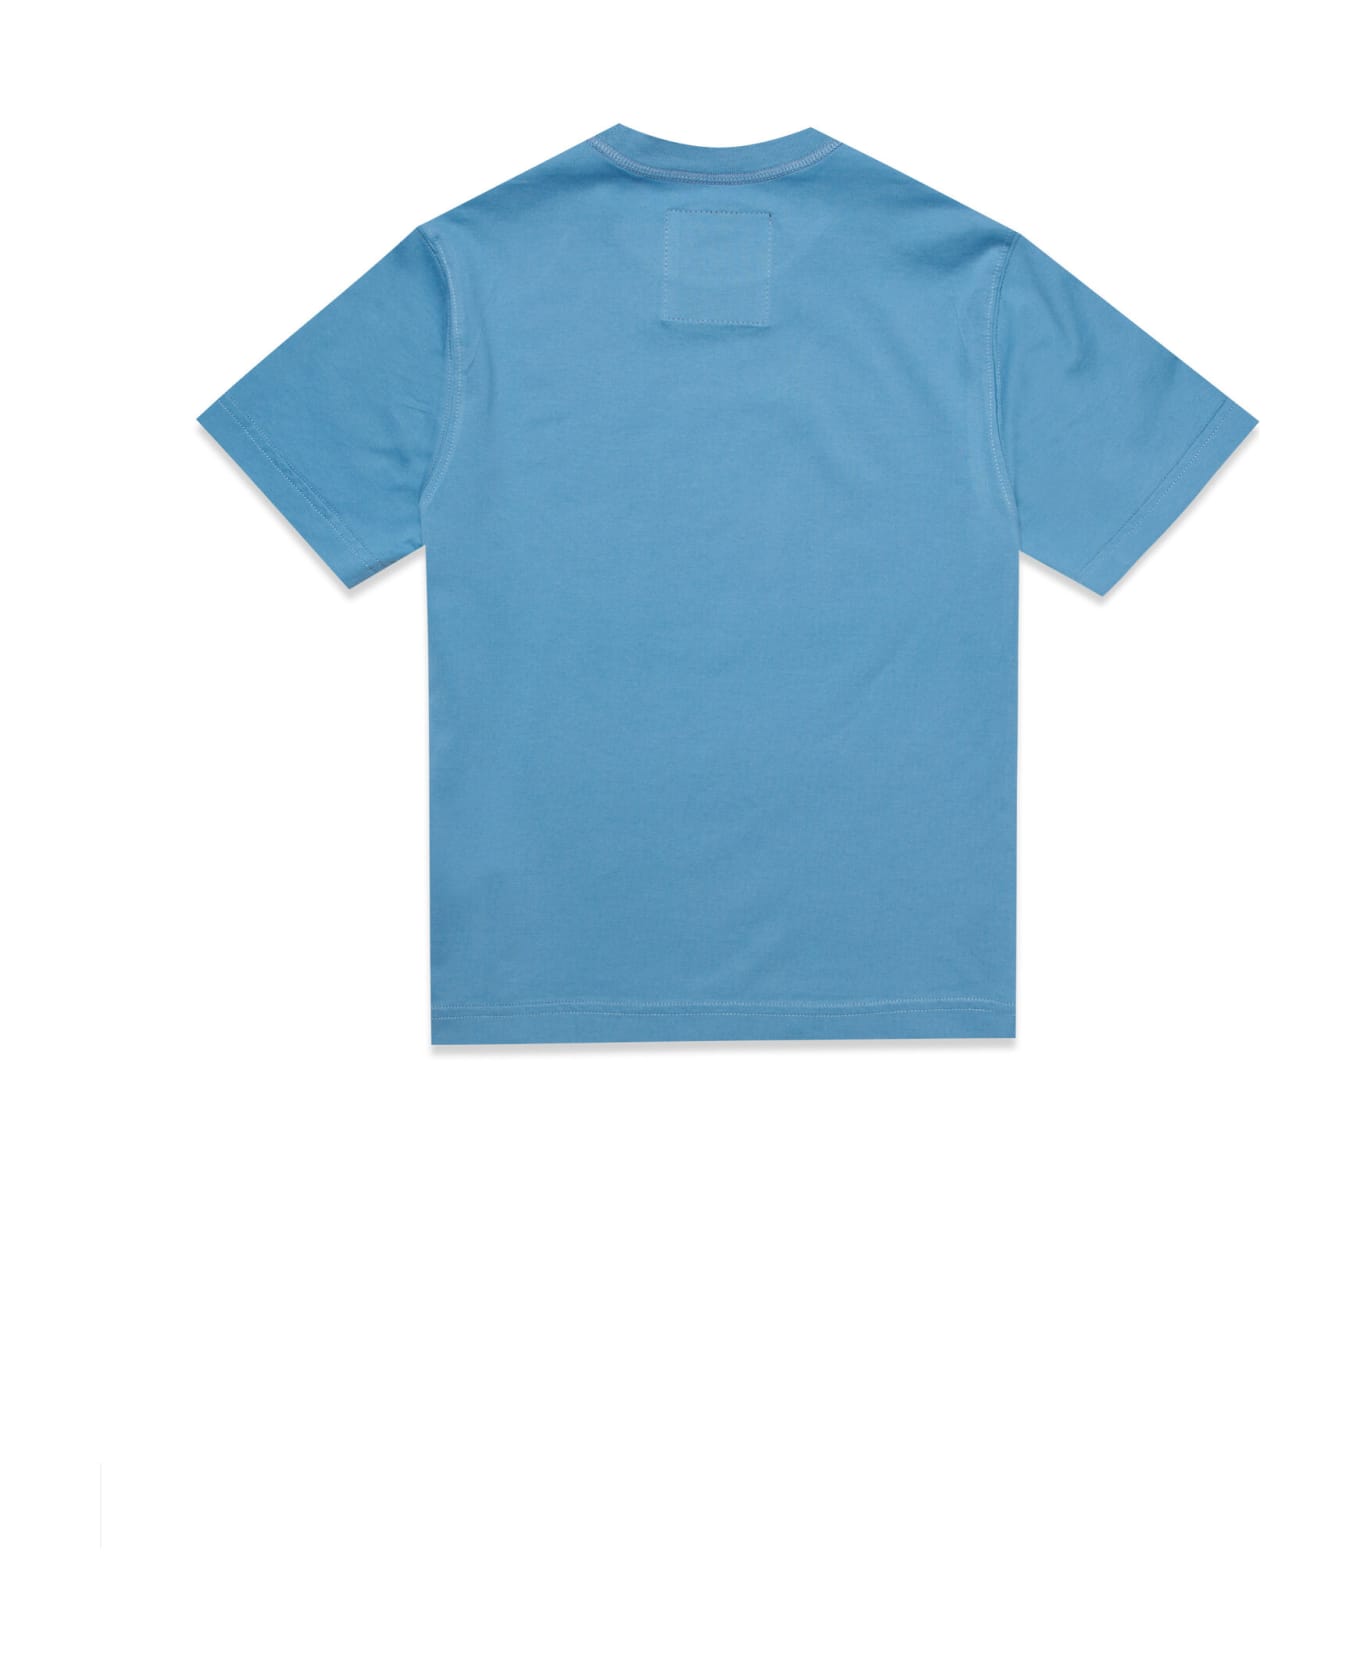 MYAR Myt21u T-shirt Myar Deadstock Fabric Crew-neck T-shirt Light Blue With Digital Heliconia Print - Dusty blue